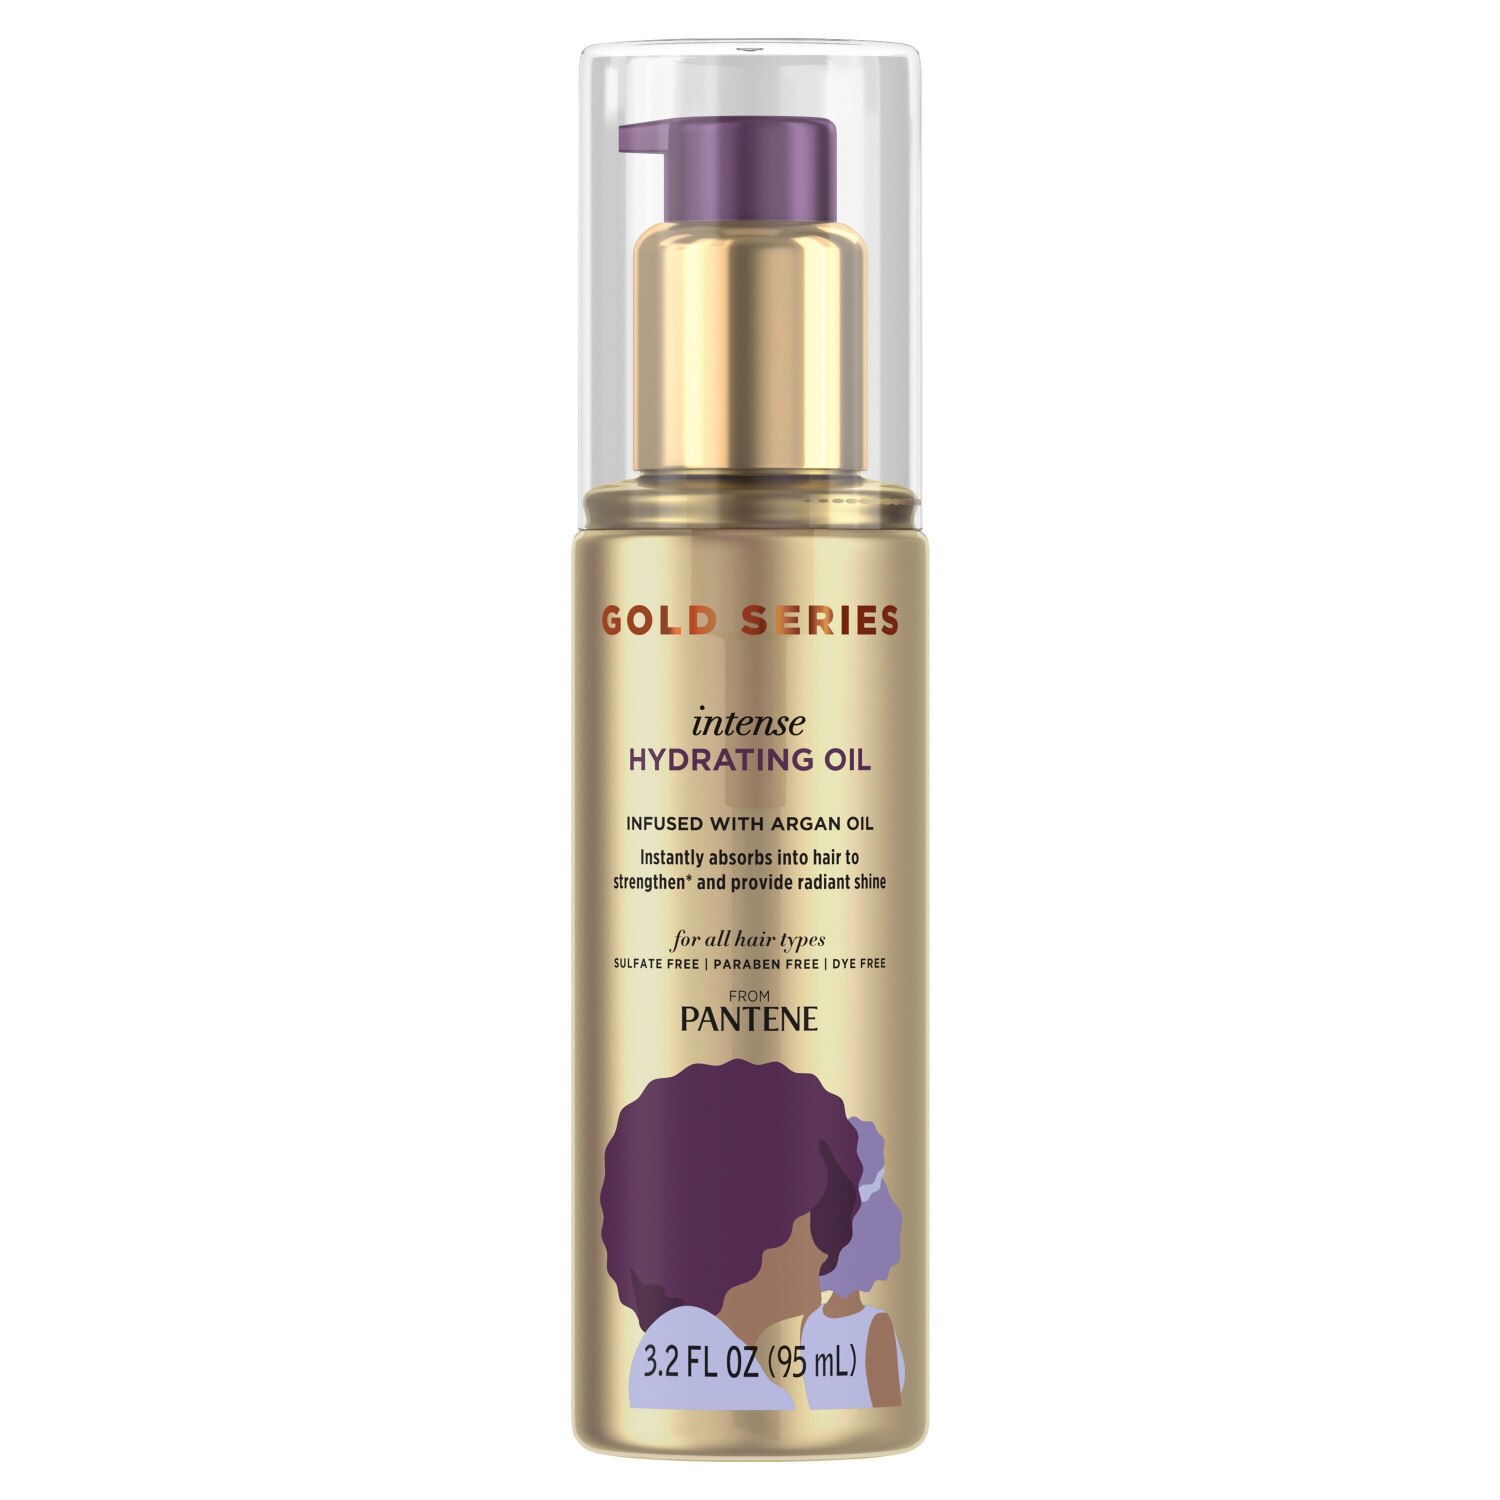 Gold Series de Pantene - Tratamiento de hidratación intensa con aceite hidratante para cabello muy rizado, sin sulfato, 3.2 oz